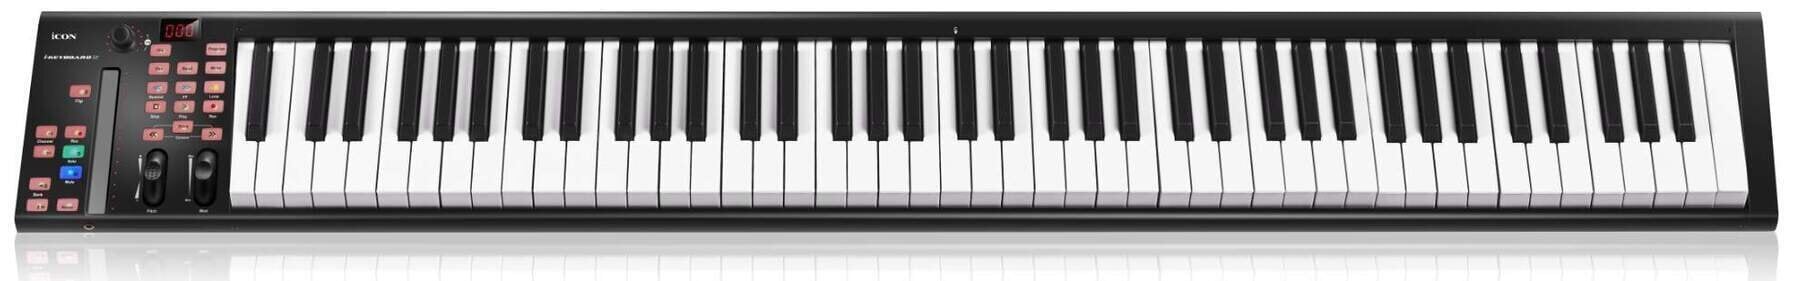 MIDI keyboard iCON iKeyboard 8X